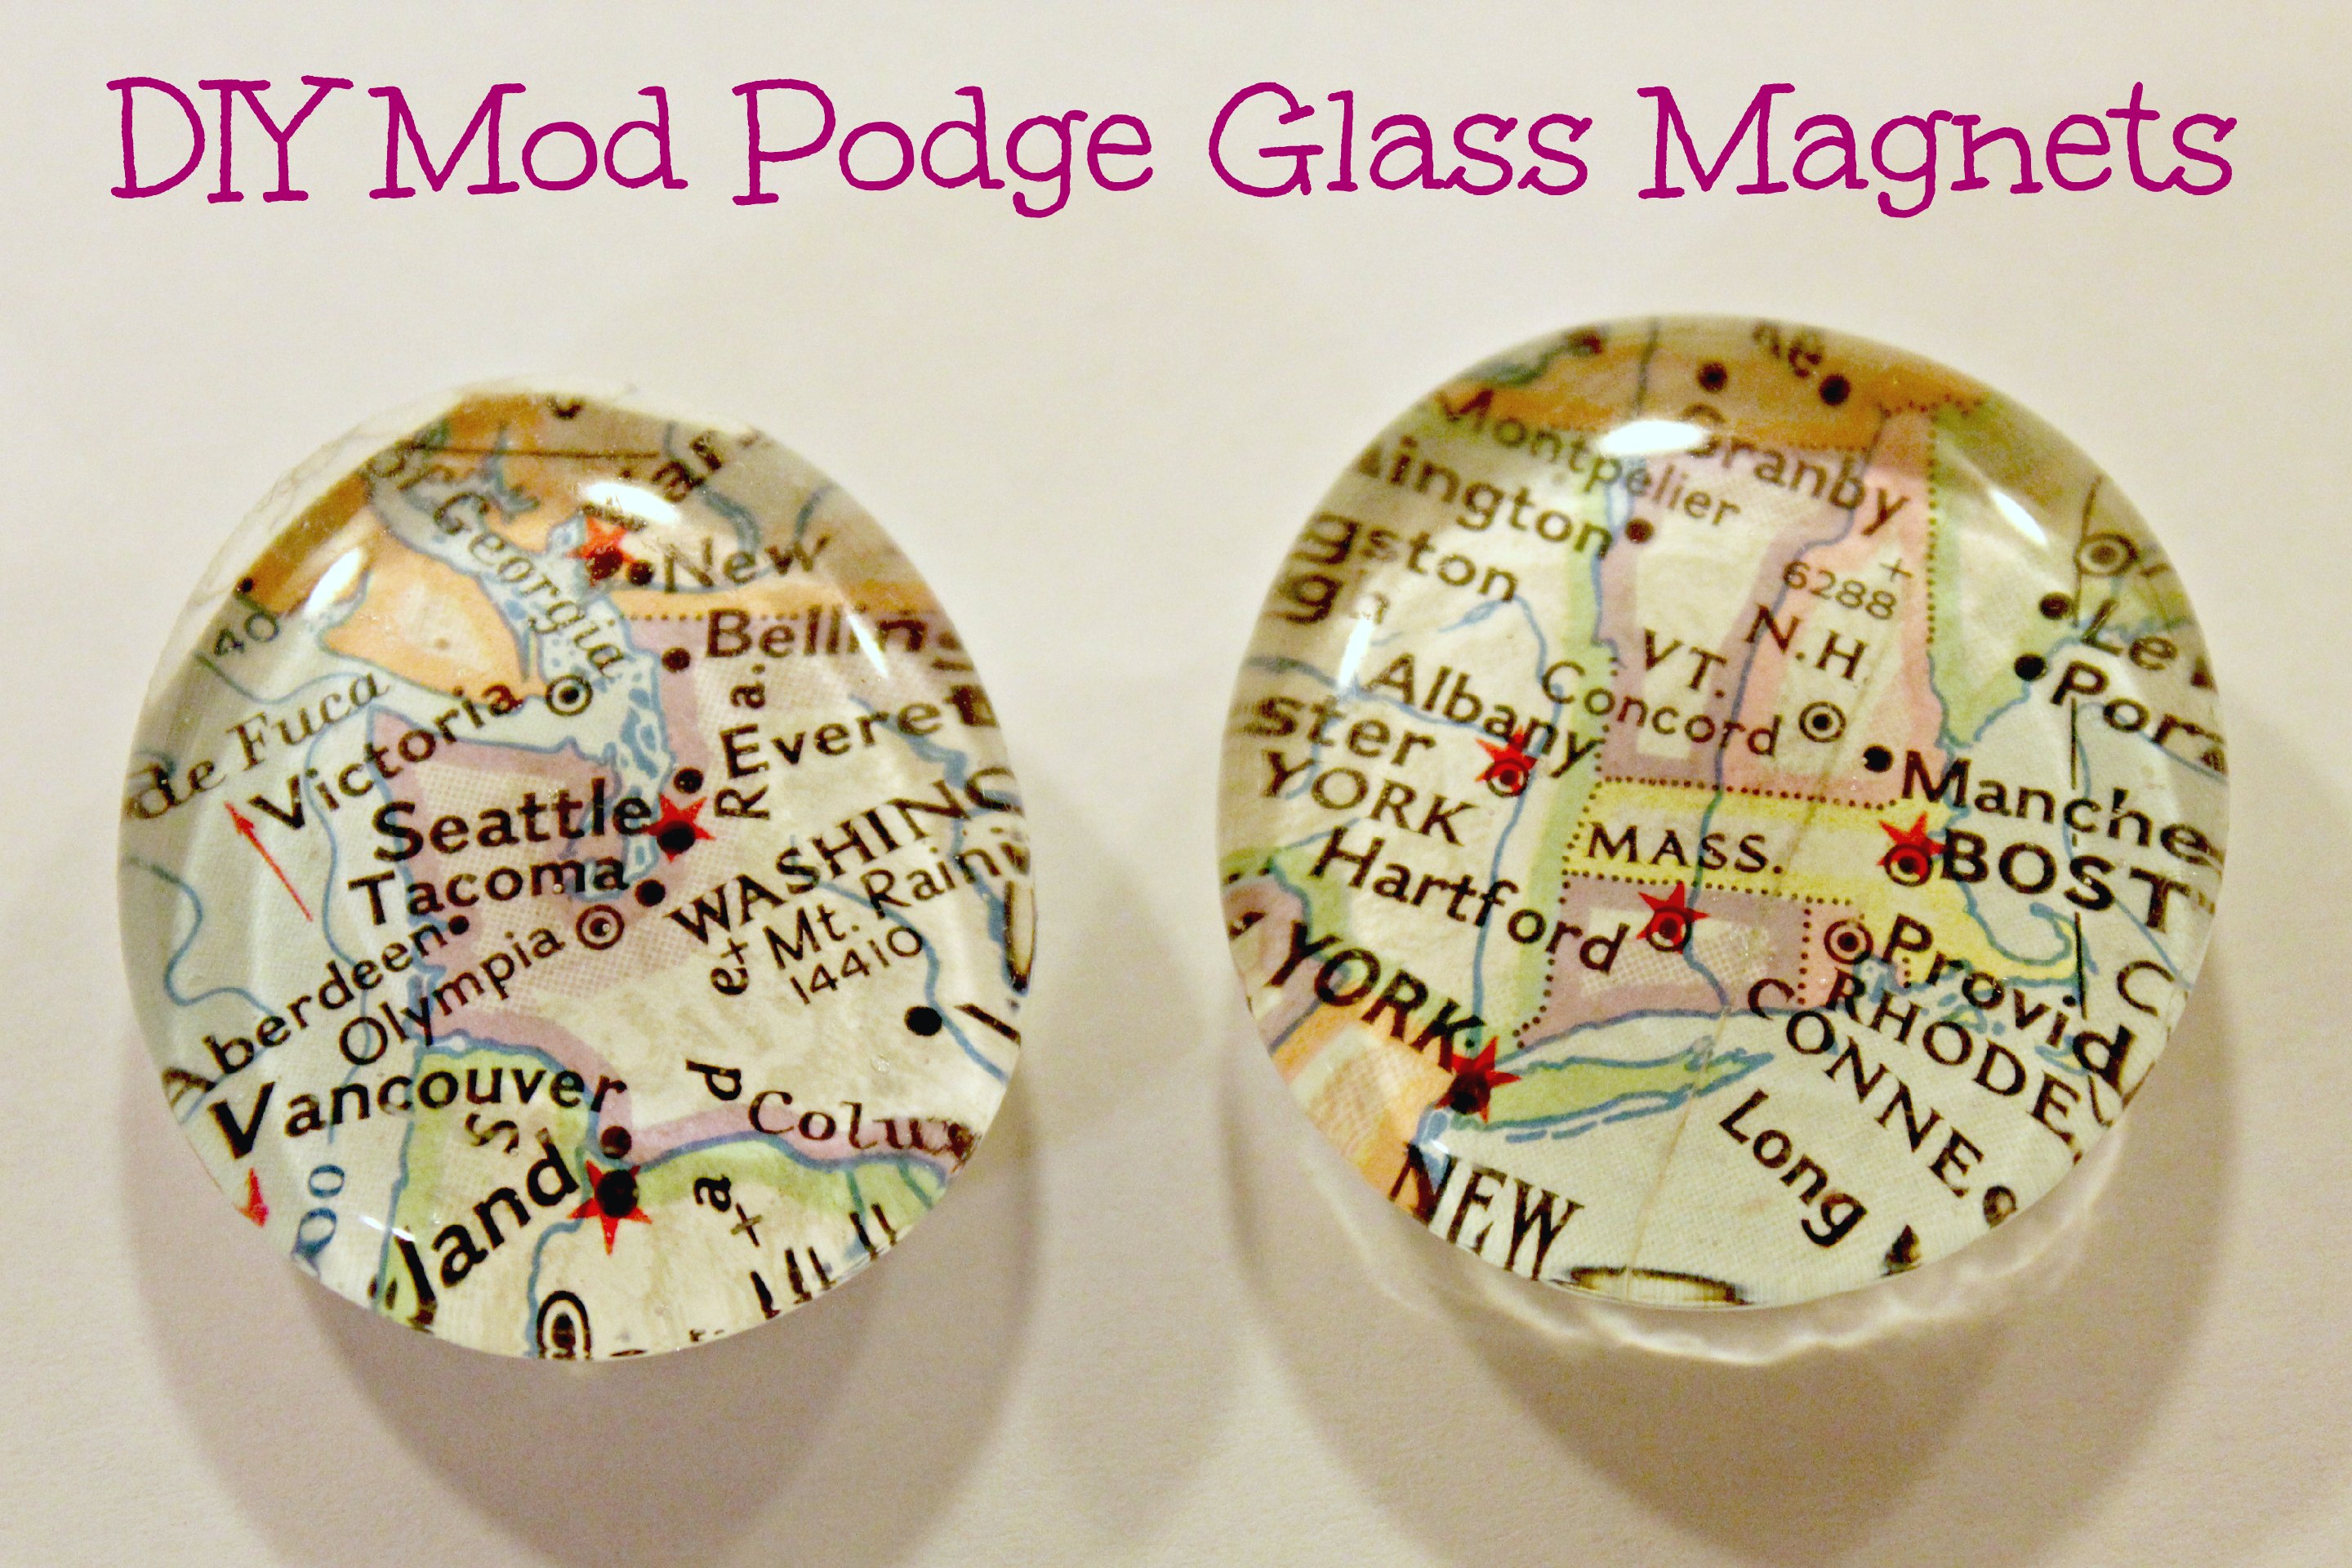 DIY Glass Magnets